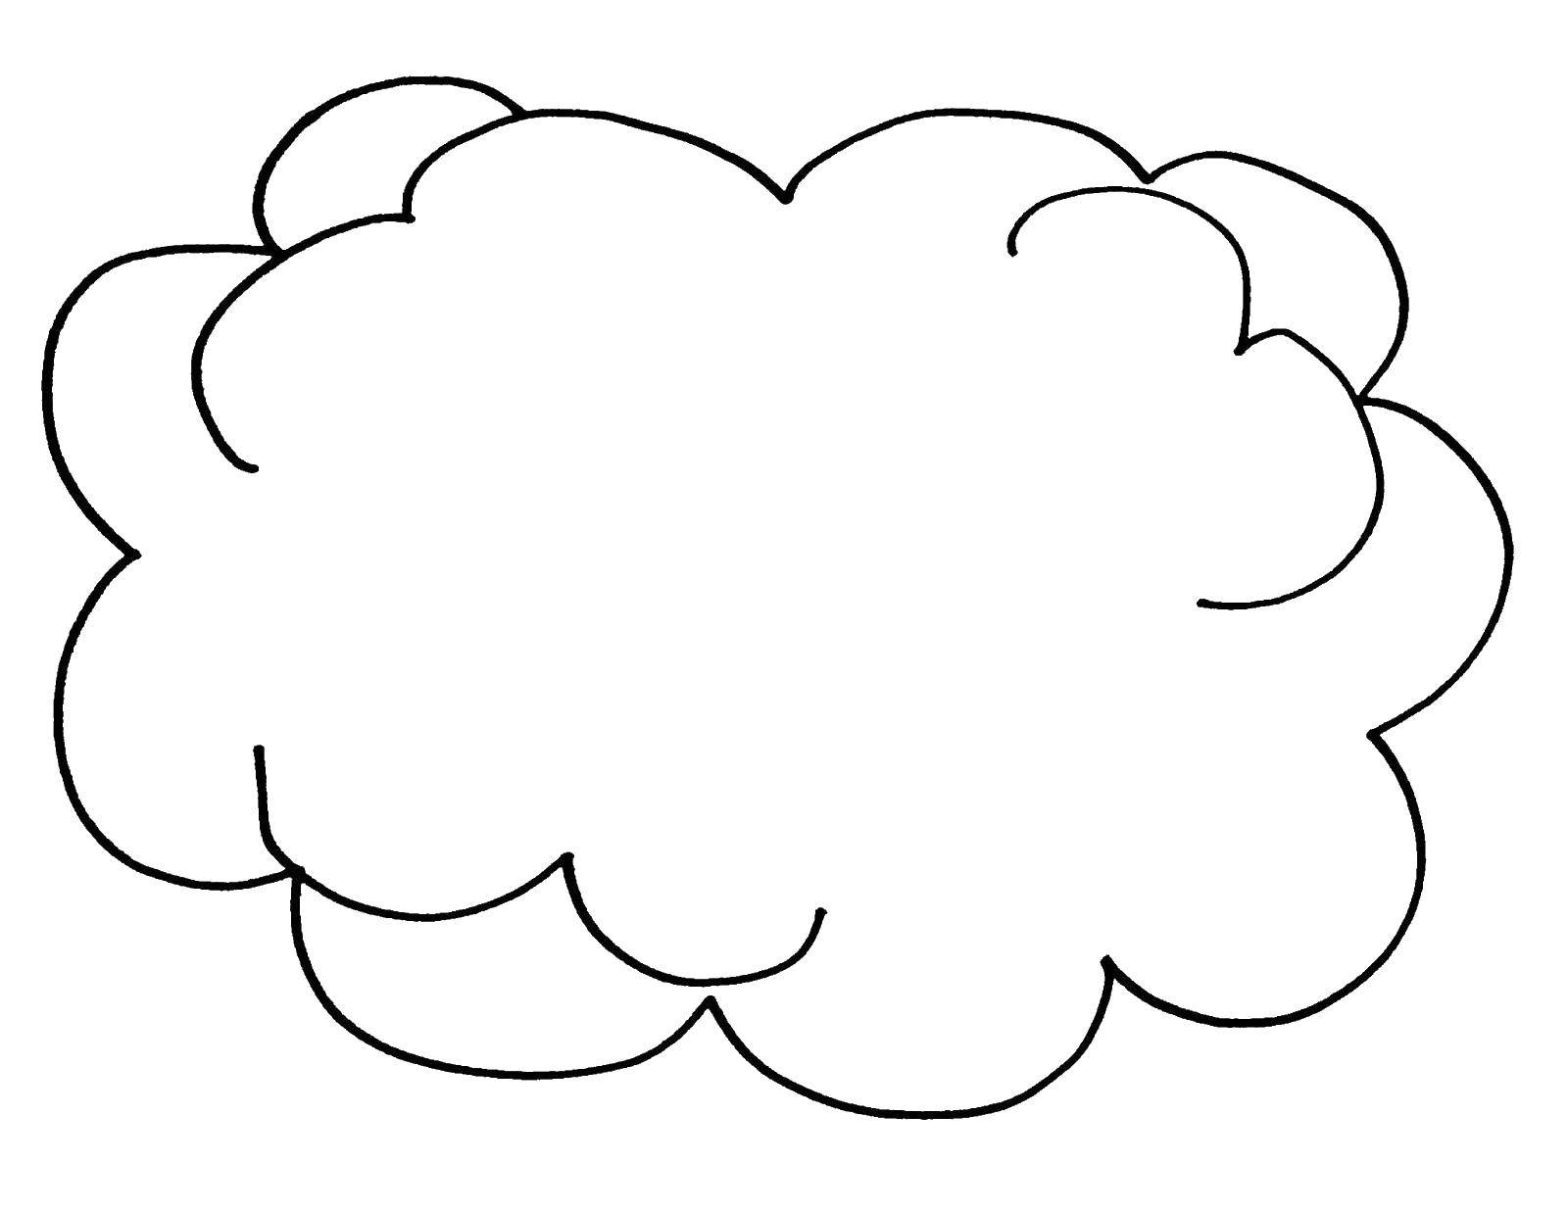 Раскраска с облаком на фоне неба (облако, небо, контур)